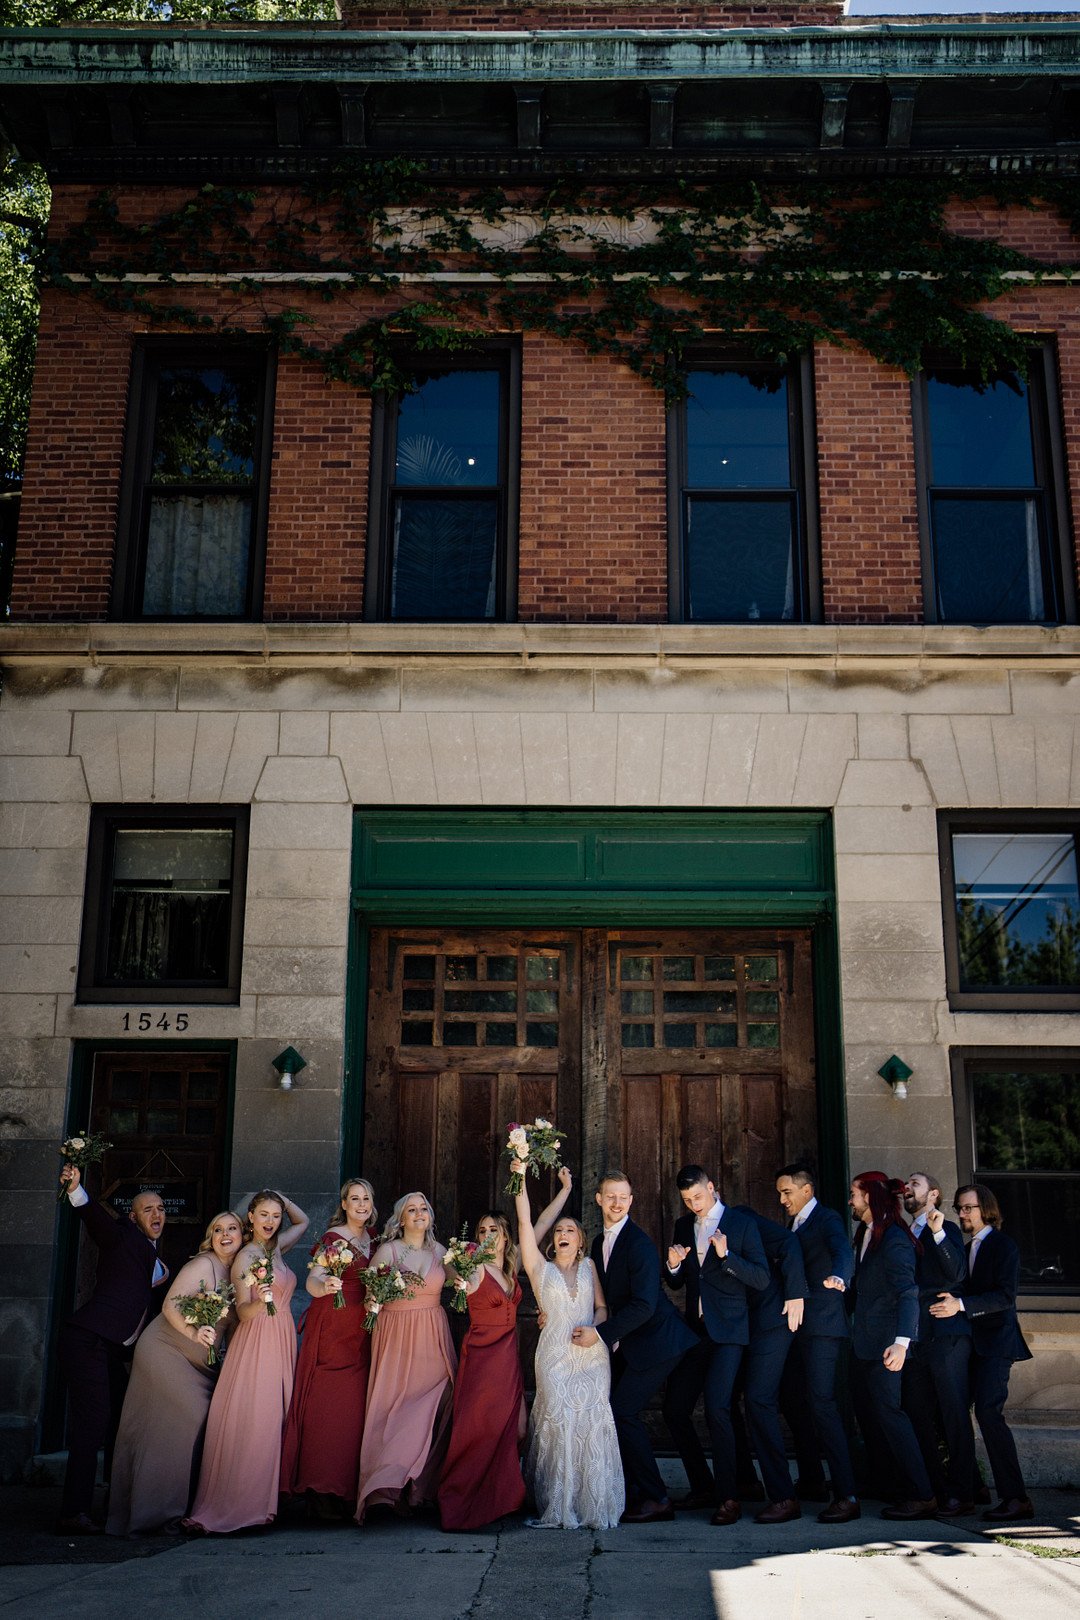 Lindstrom_Smigielski_Aspen Avenue_Aspen-Avenue-Chicago-Wedding-Photograper-Firehouse-Venue-Grace-and-Ivory-Dress-FAV-92_low.jpg